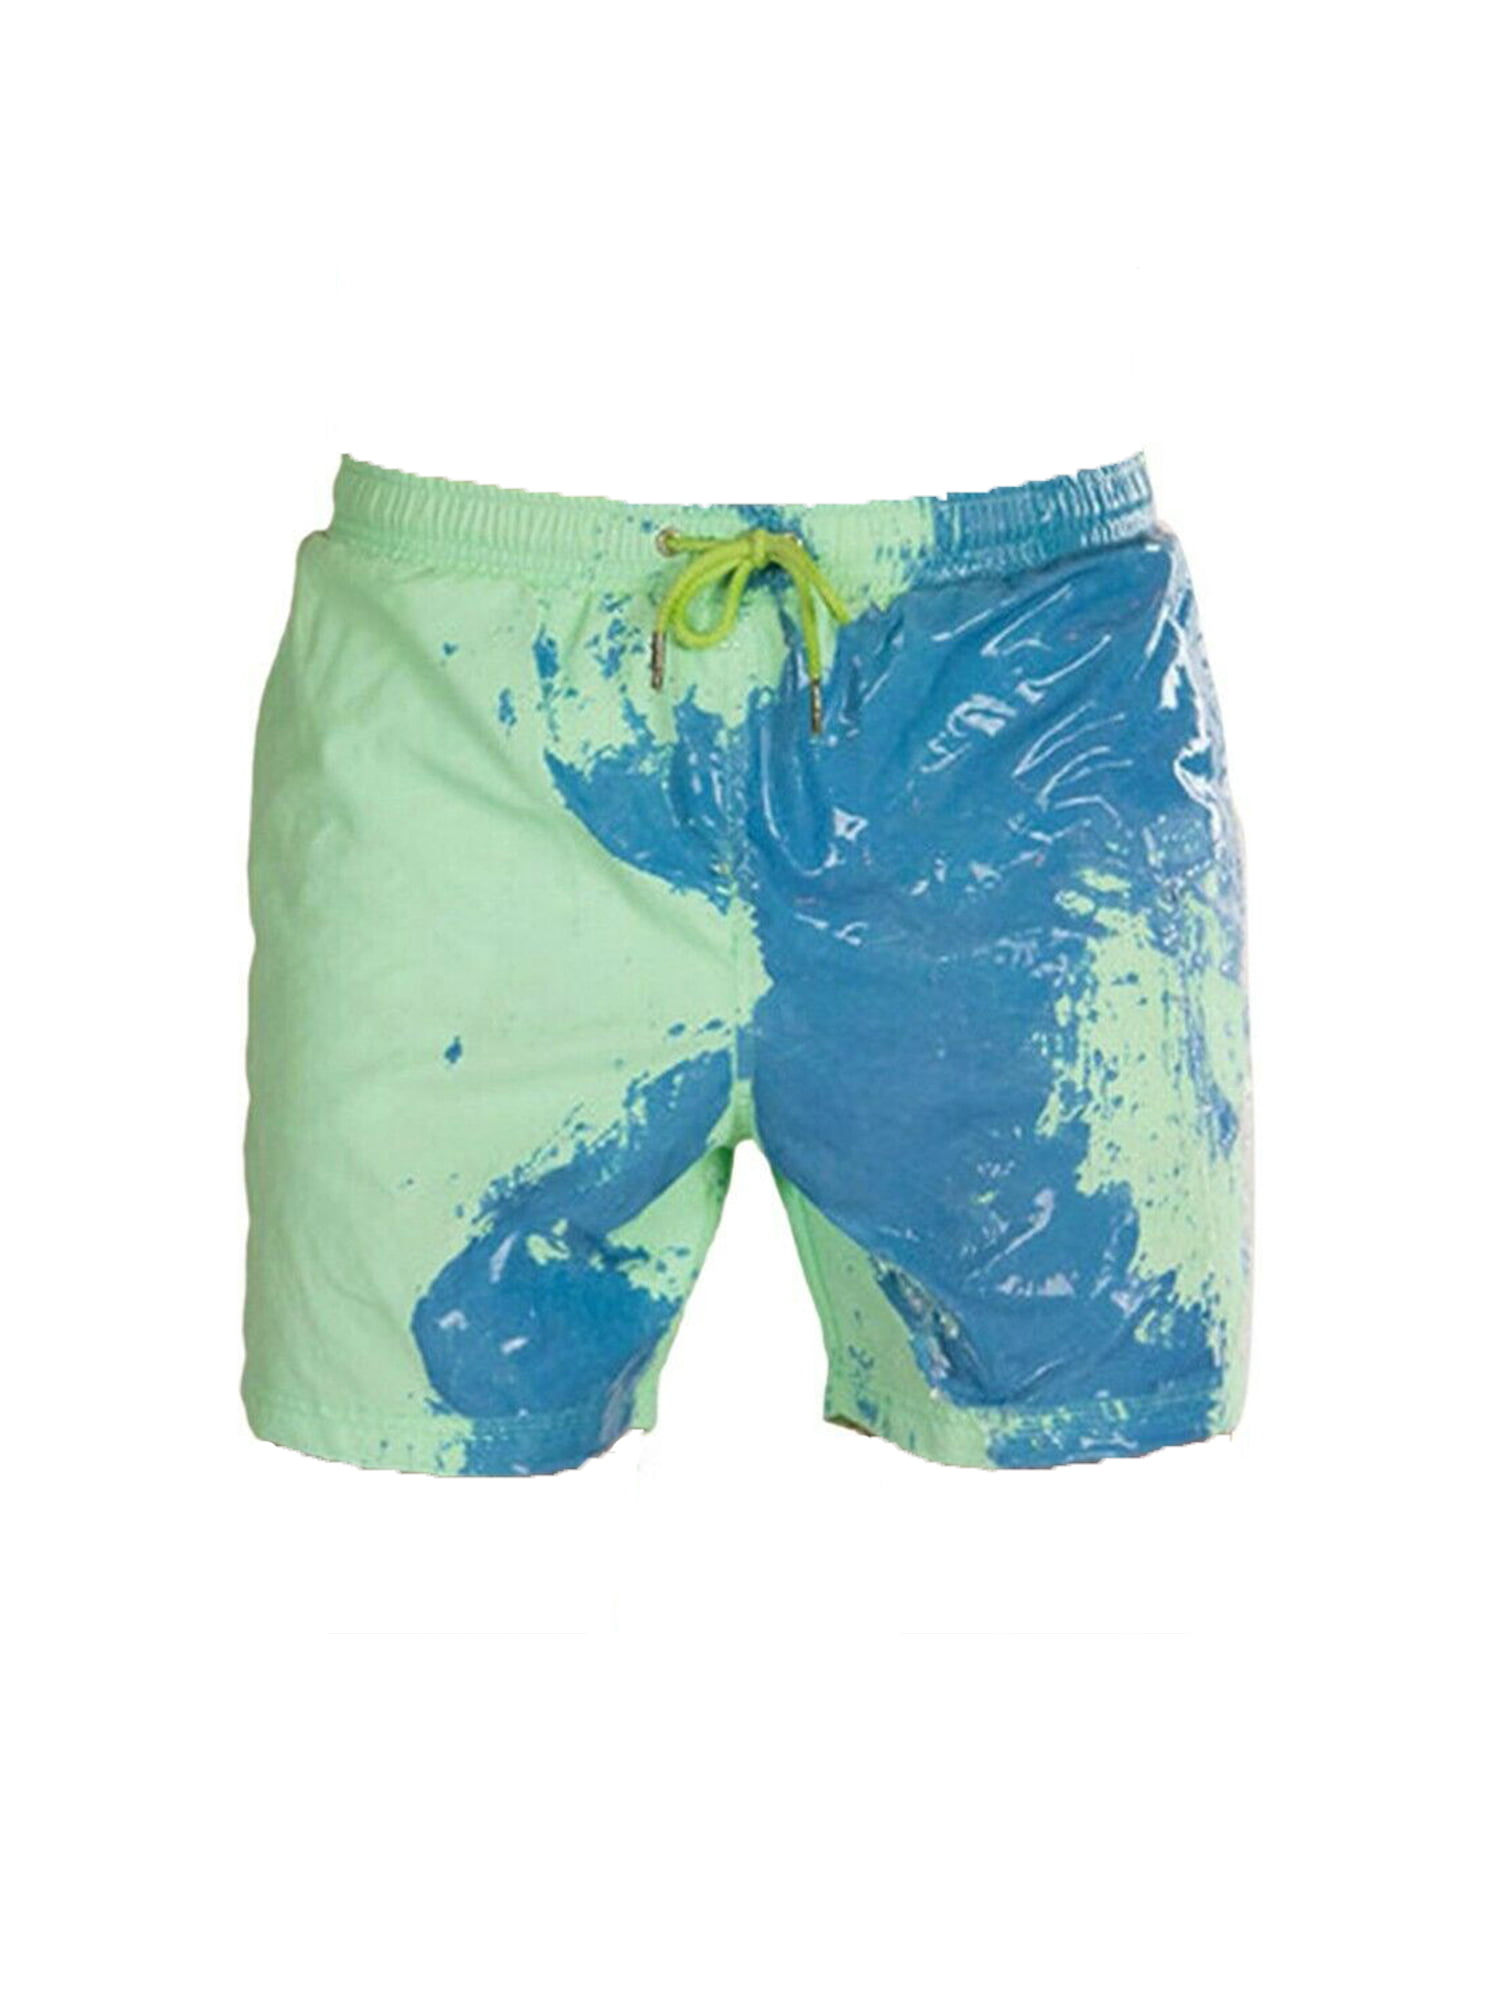 Multicolor Fullyday Mens Beachwear Board Shorts,Quick Dry Shorts Printed Pants 